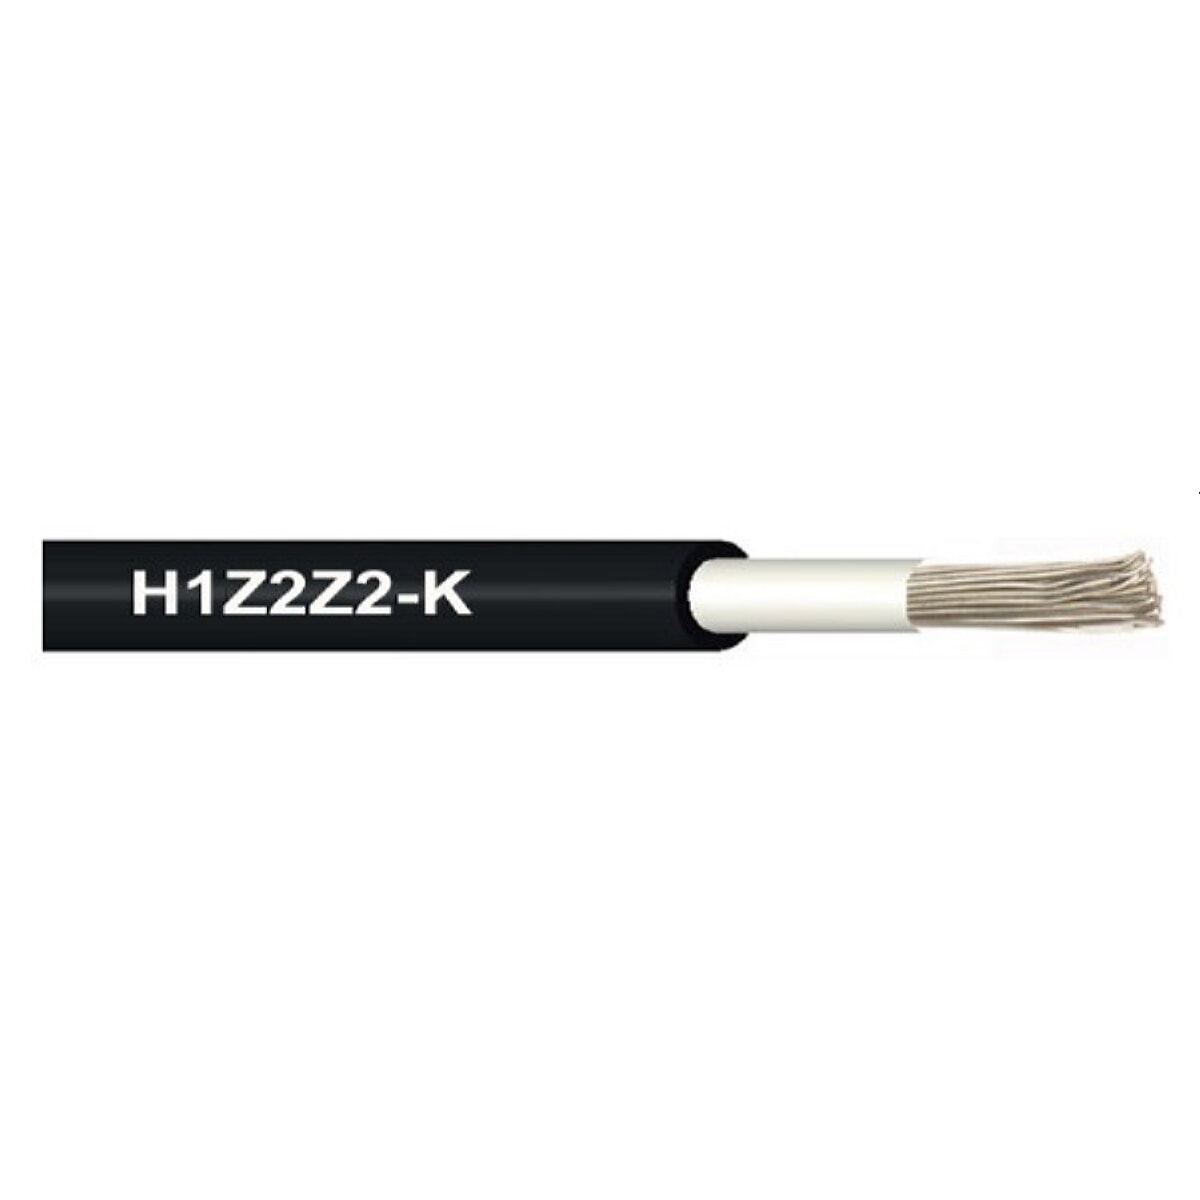 NEUT solar cable H1Z2Z2-K 1x4 black can be buried EN50618